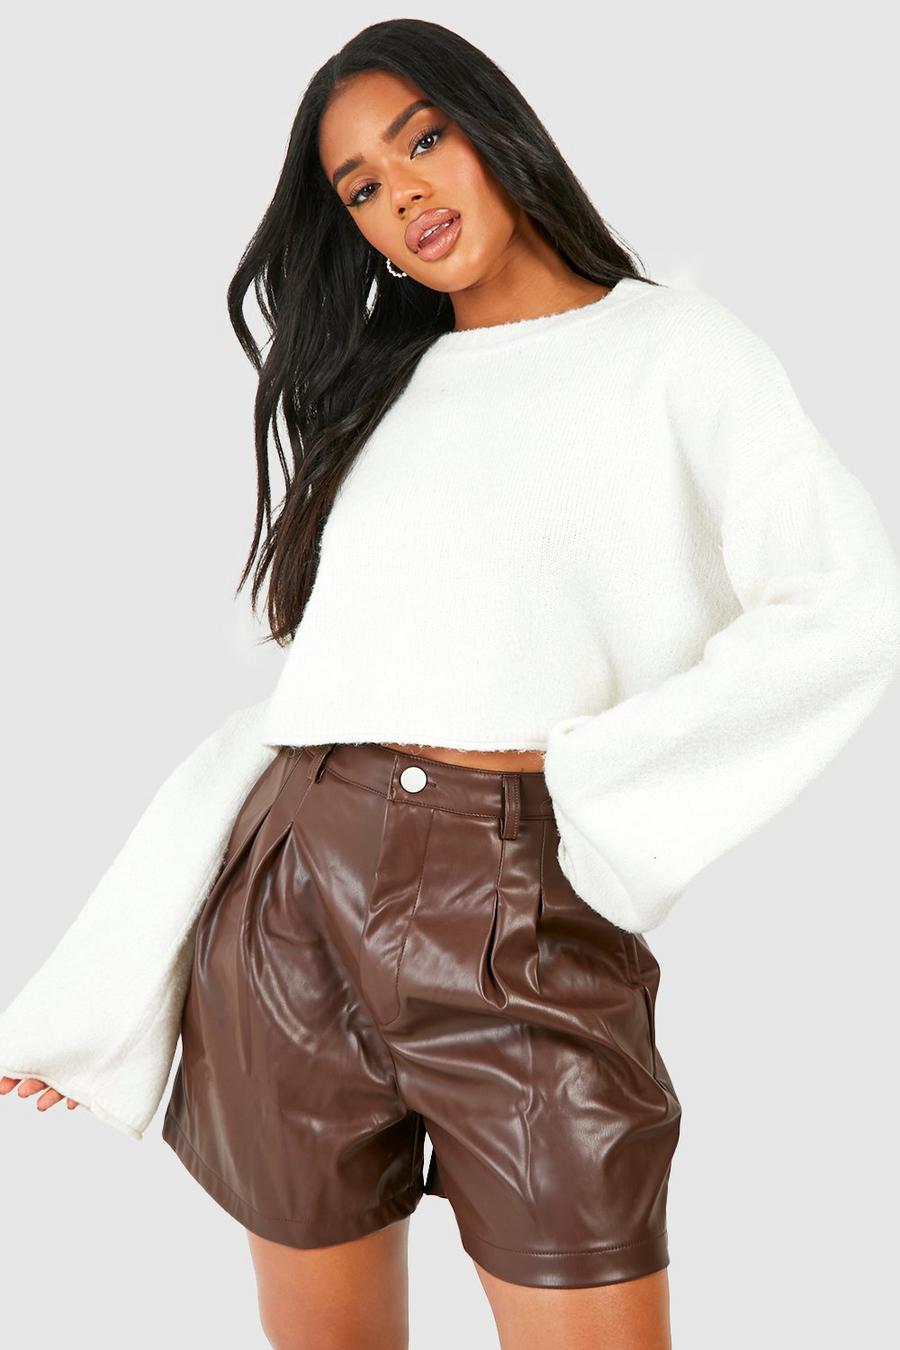 https://media.boohoo.com/i/boohoo/gzz80558_chocolate_xl/female-chocolate-faux-leather-high-waisted-shorts/?w=900&qlt=default&fmt.jp2.qlt=70&fmt=auto&sm=fit